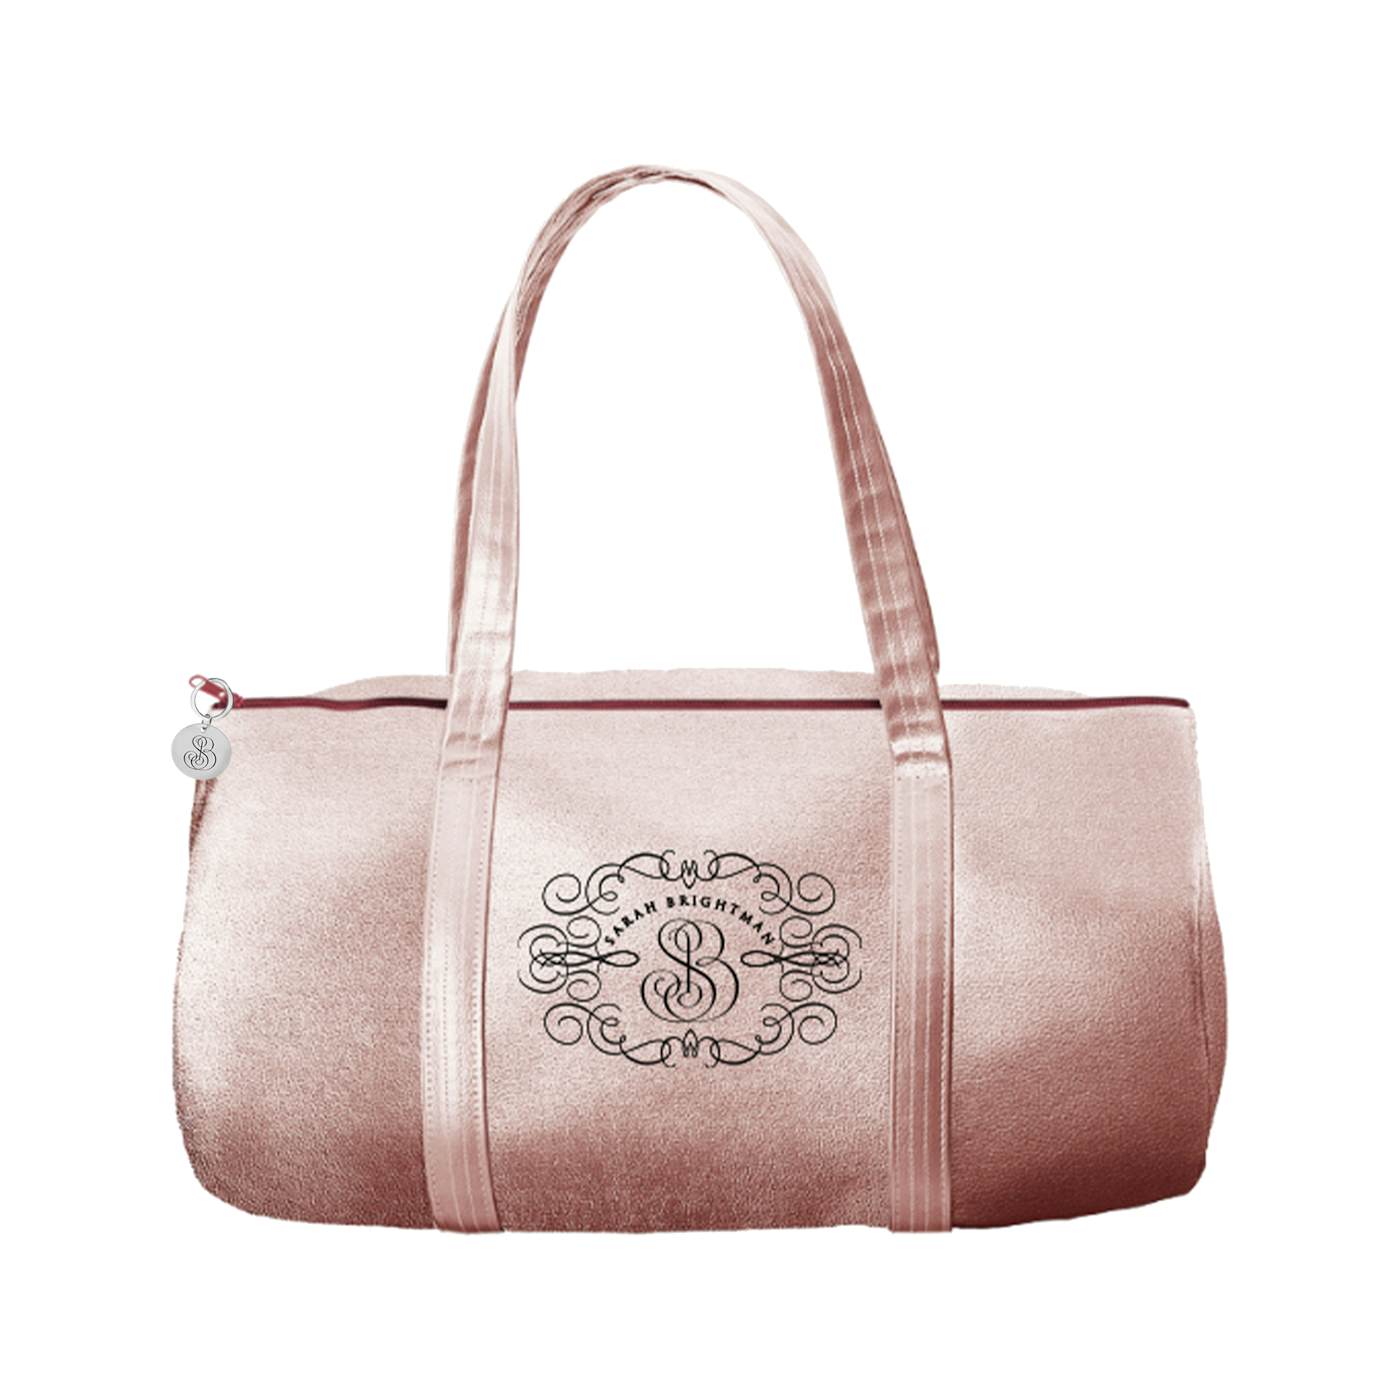 Sarah Brightman Rose Gold Weekender Bag with SB Charm